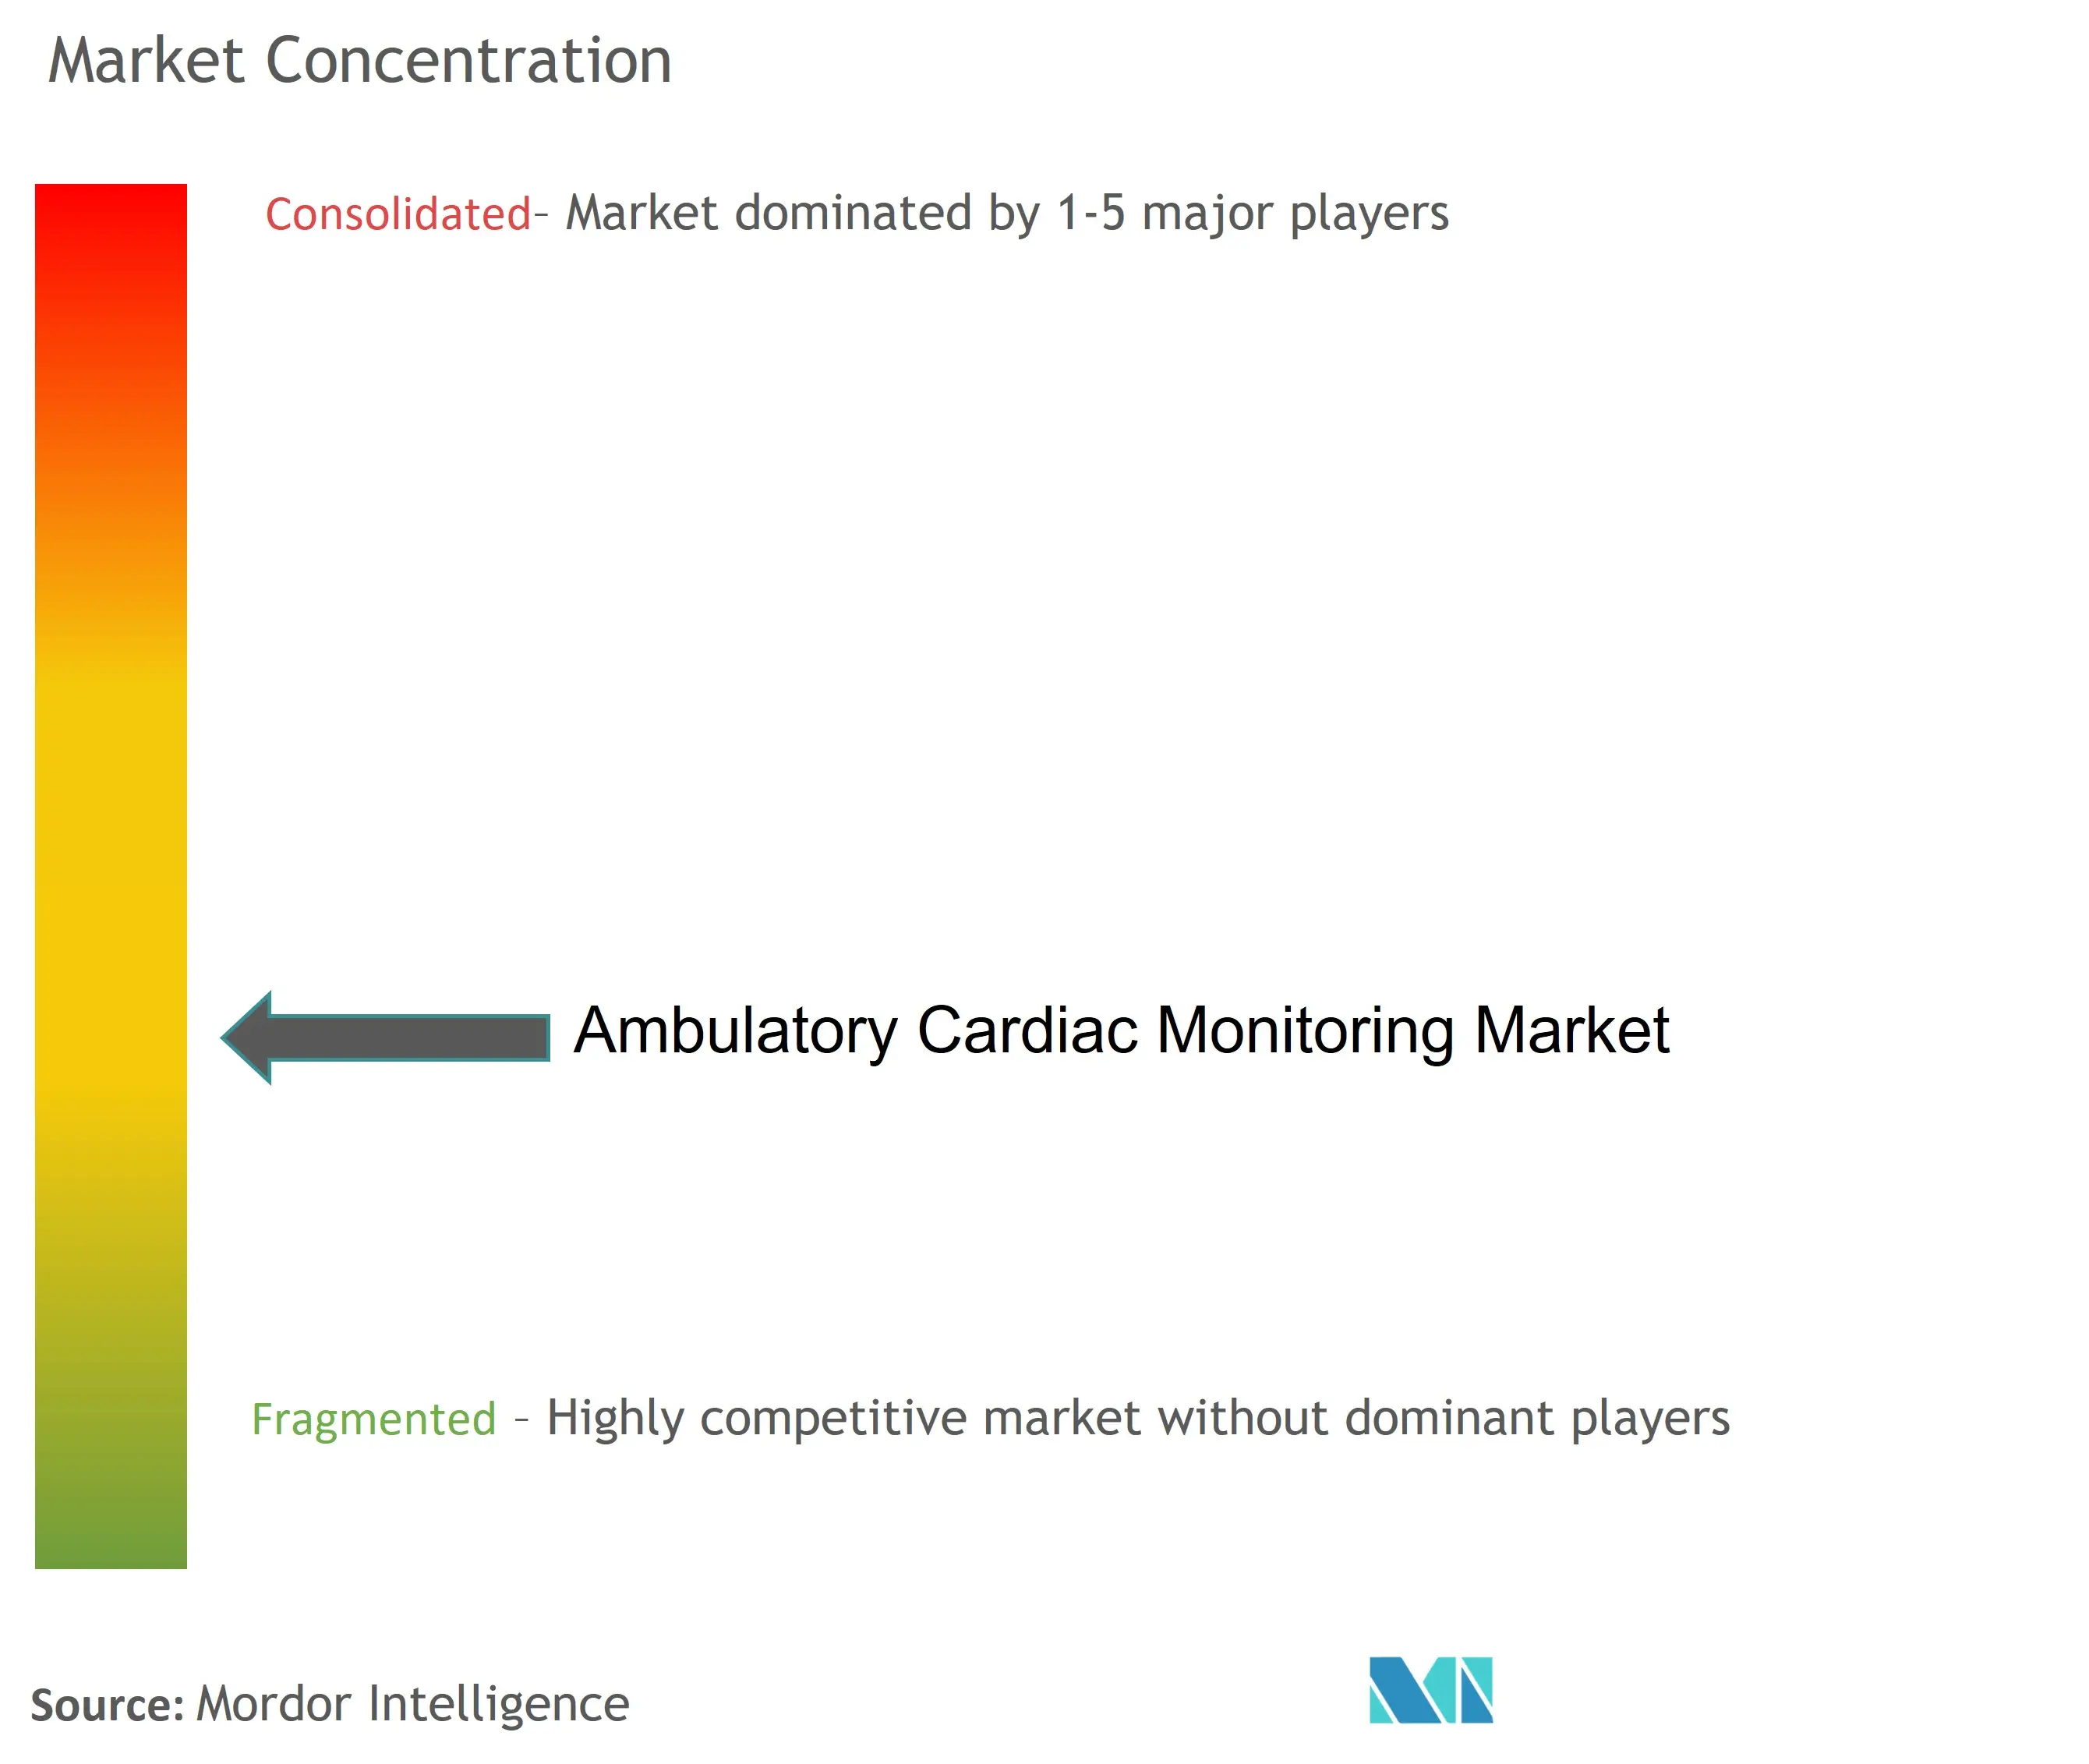 Ambulatory Cardiac Monitoring Market Concentration